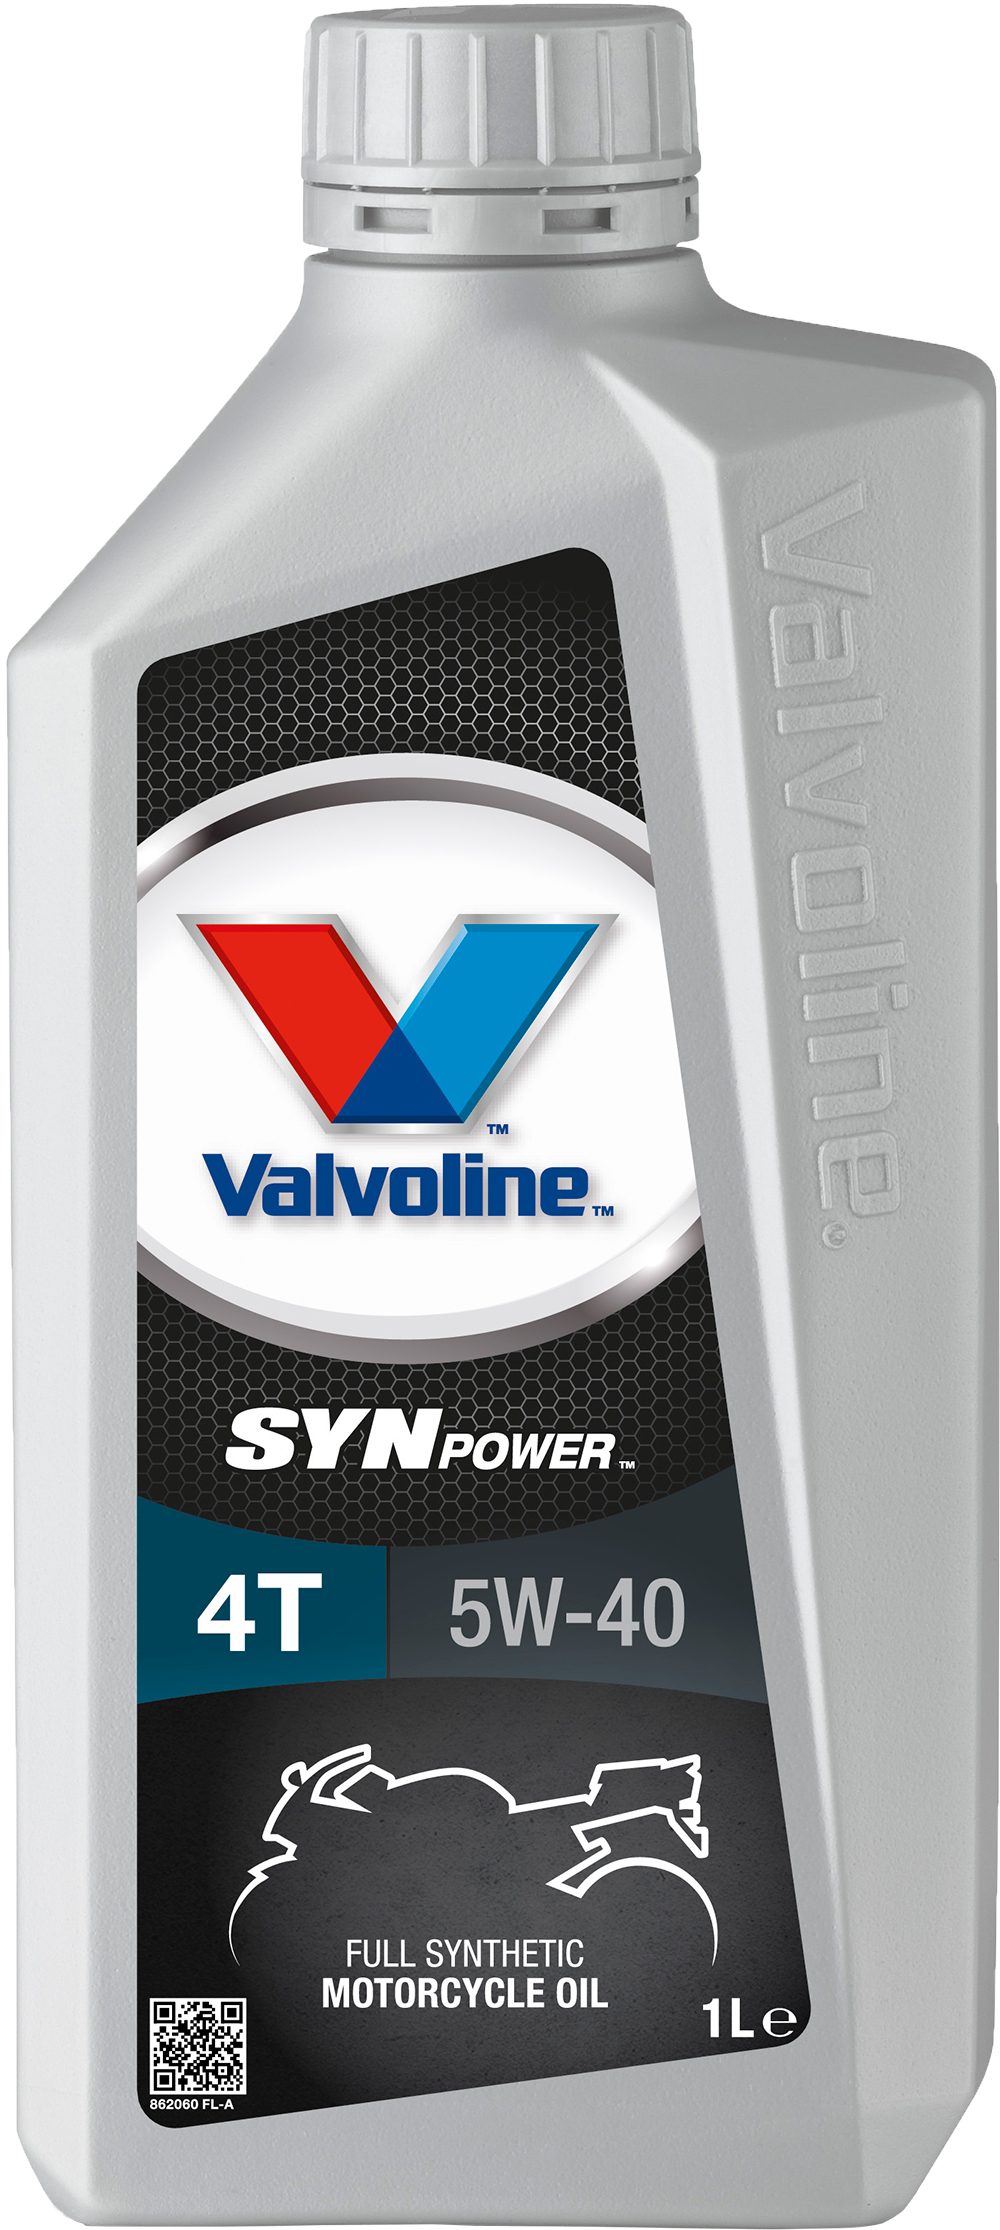 Valvoline SynPower 4T 5W-40